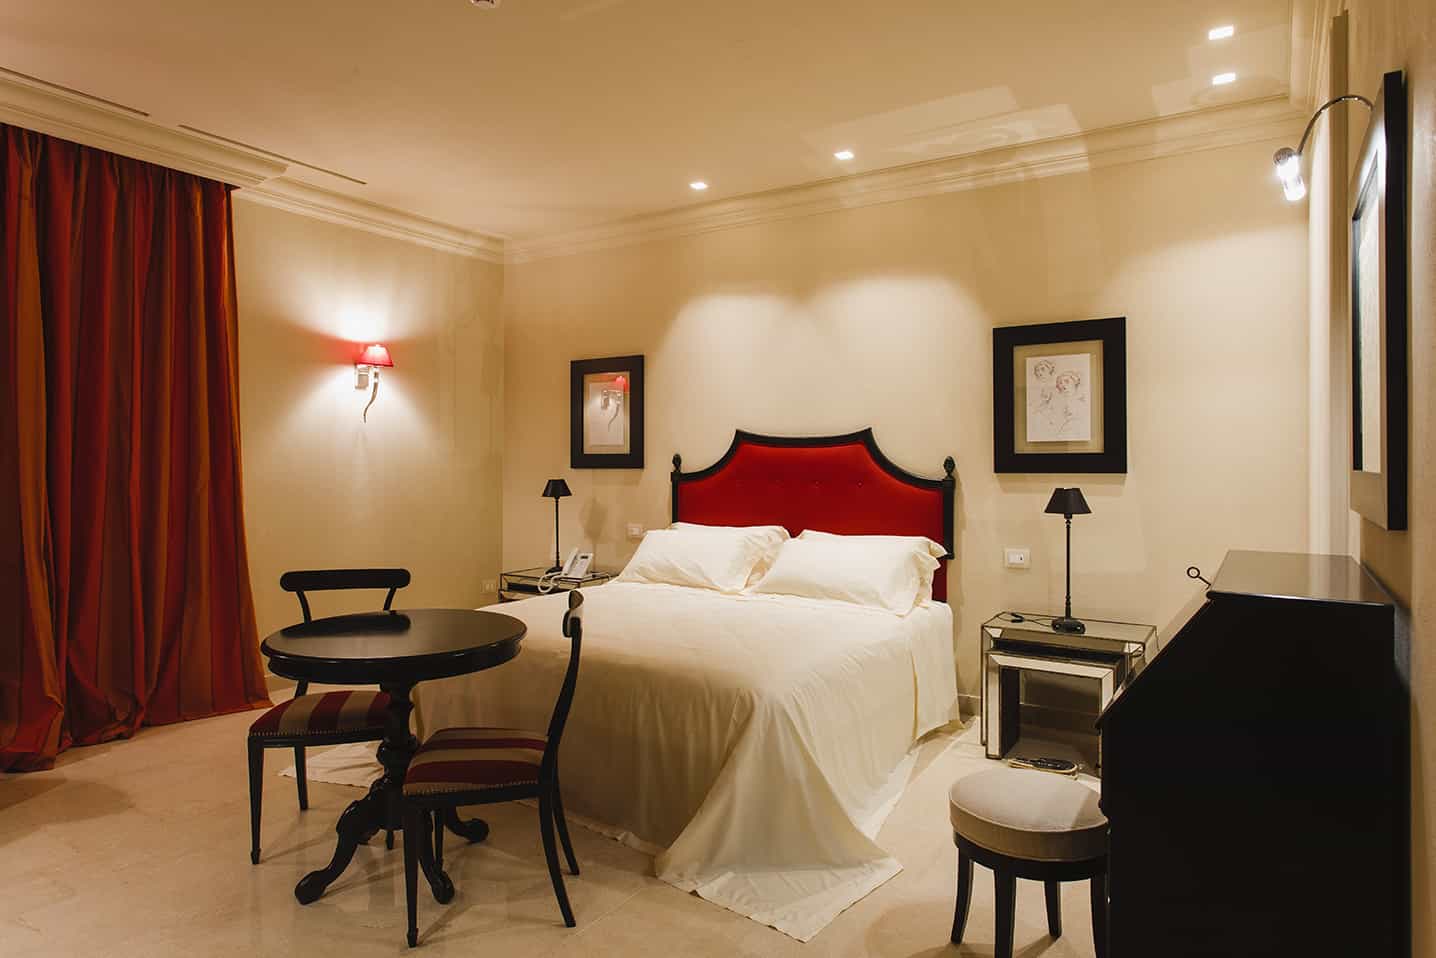 The Deluxe rooms, Hotel in Matera - Alvino 1884